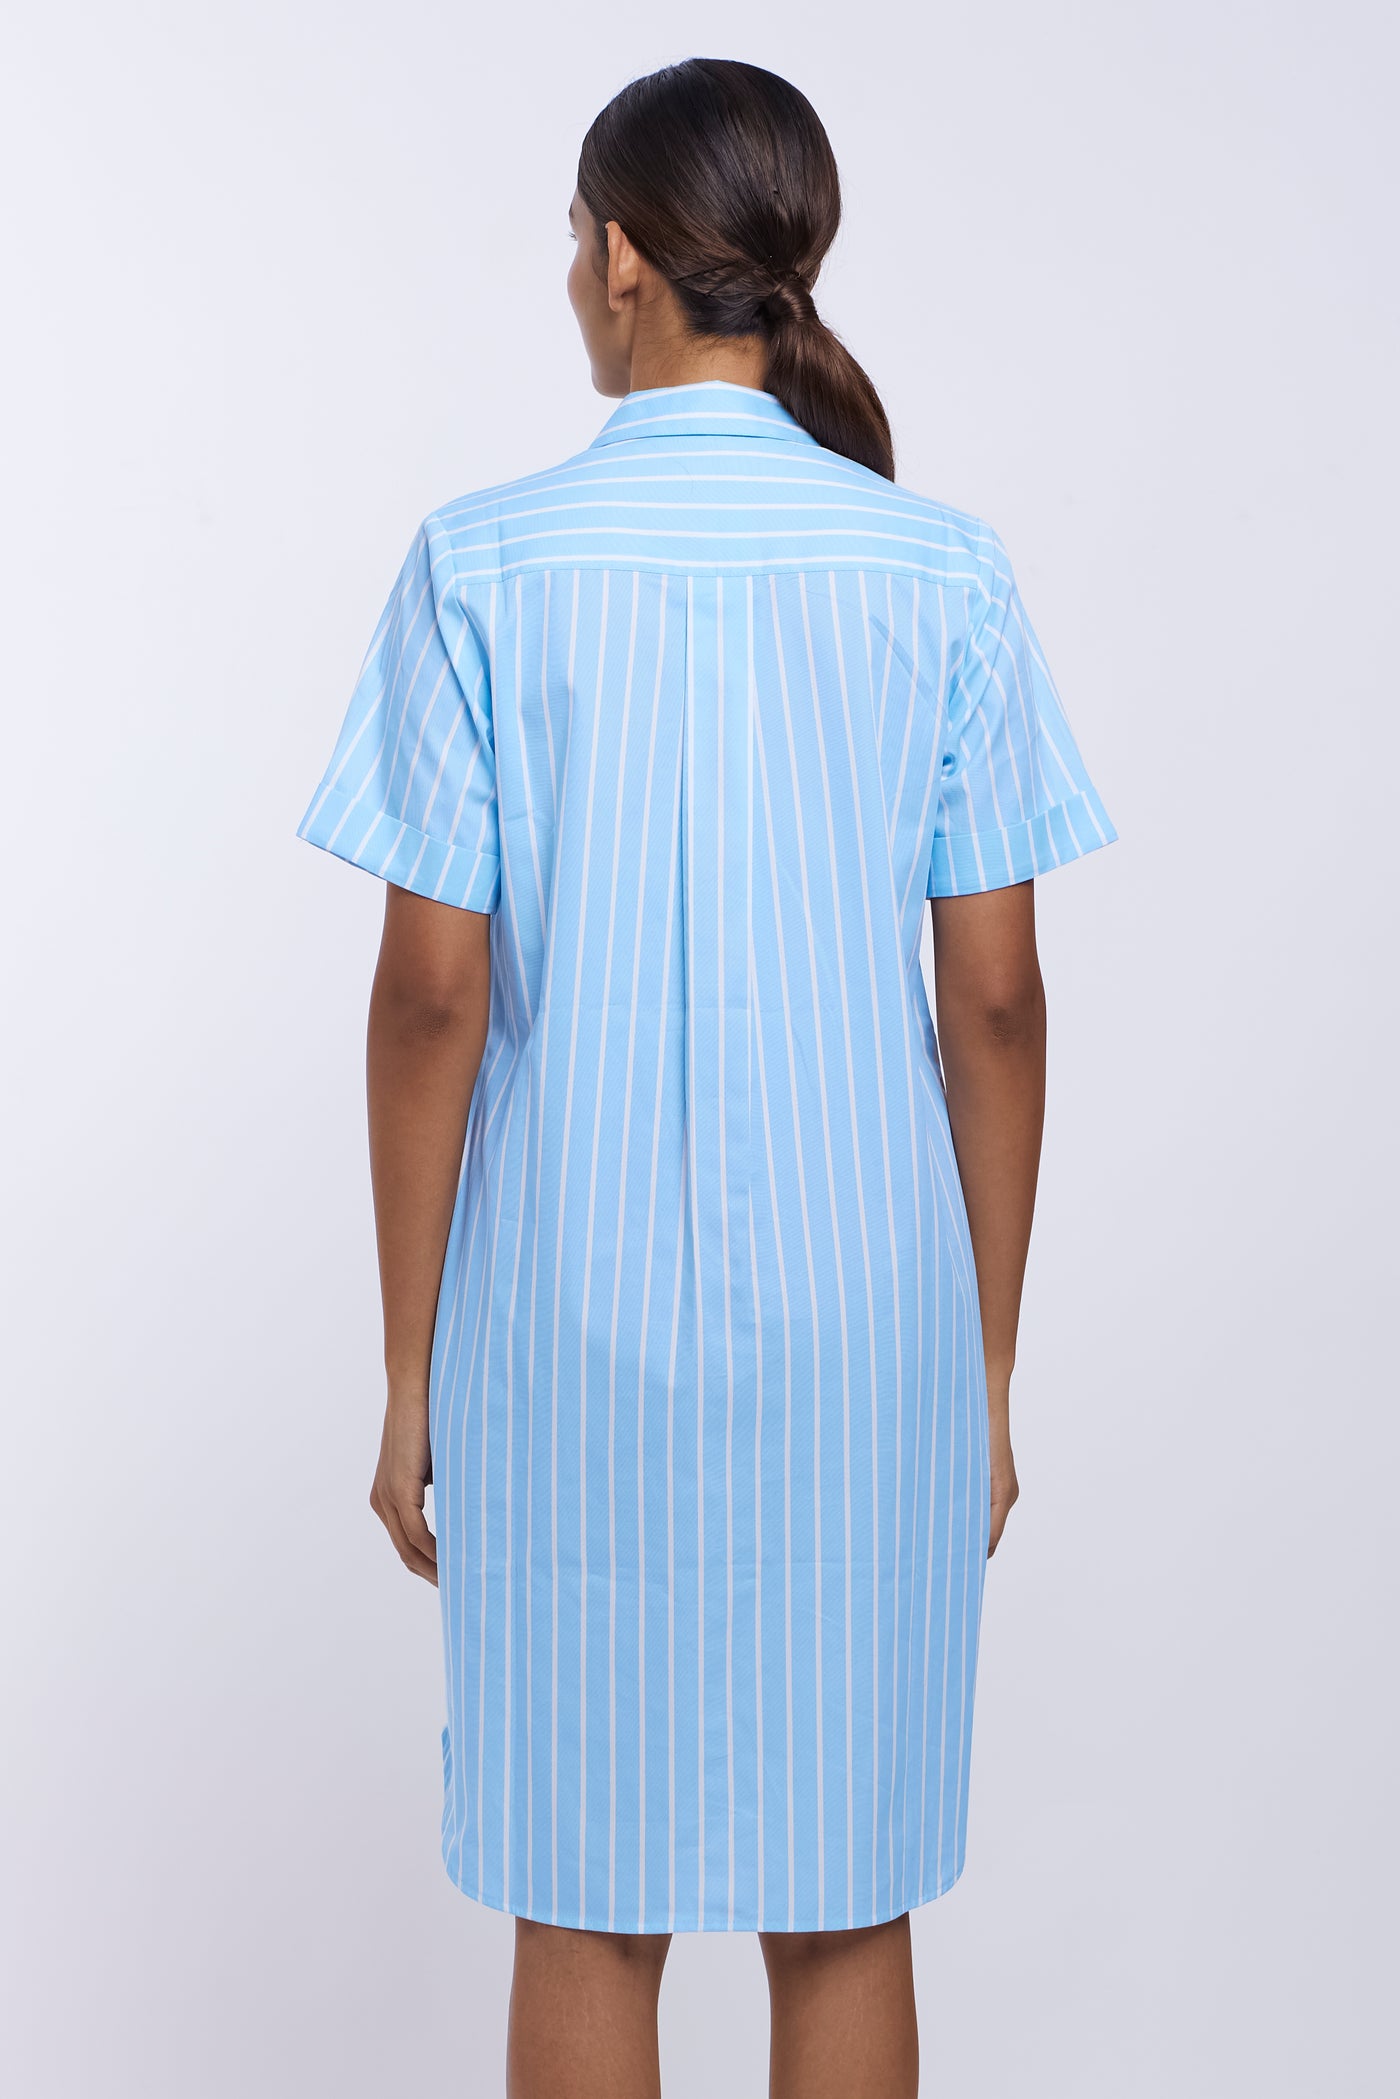 Blue Stripes Butto -Down Dress